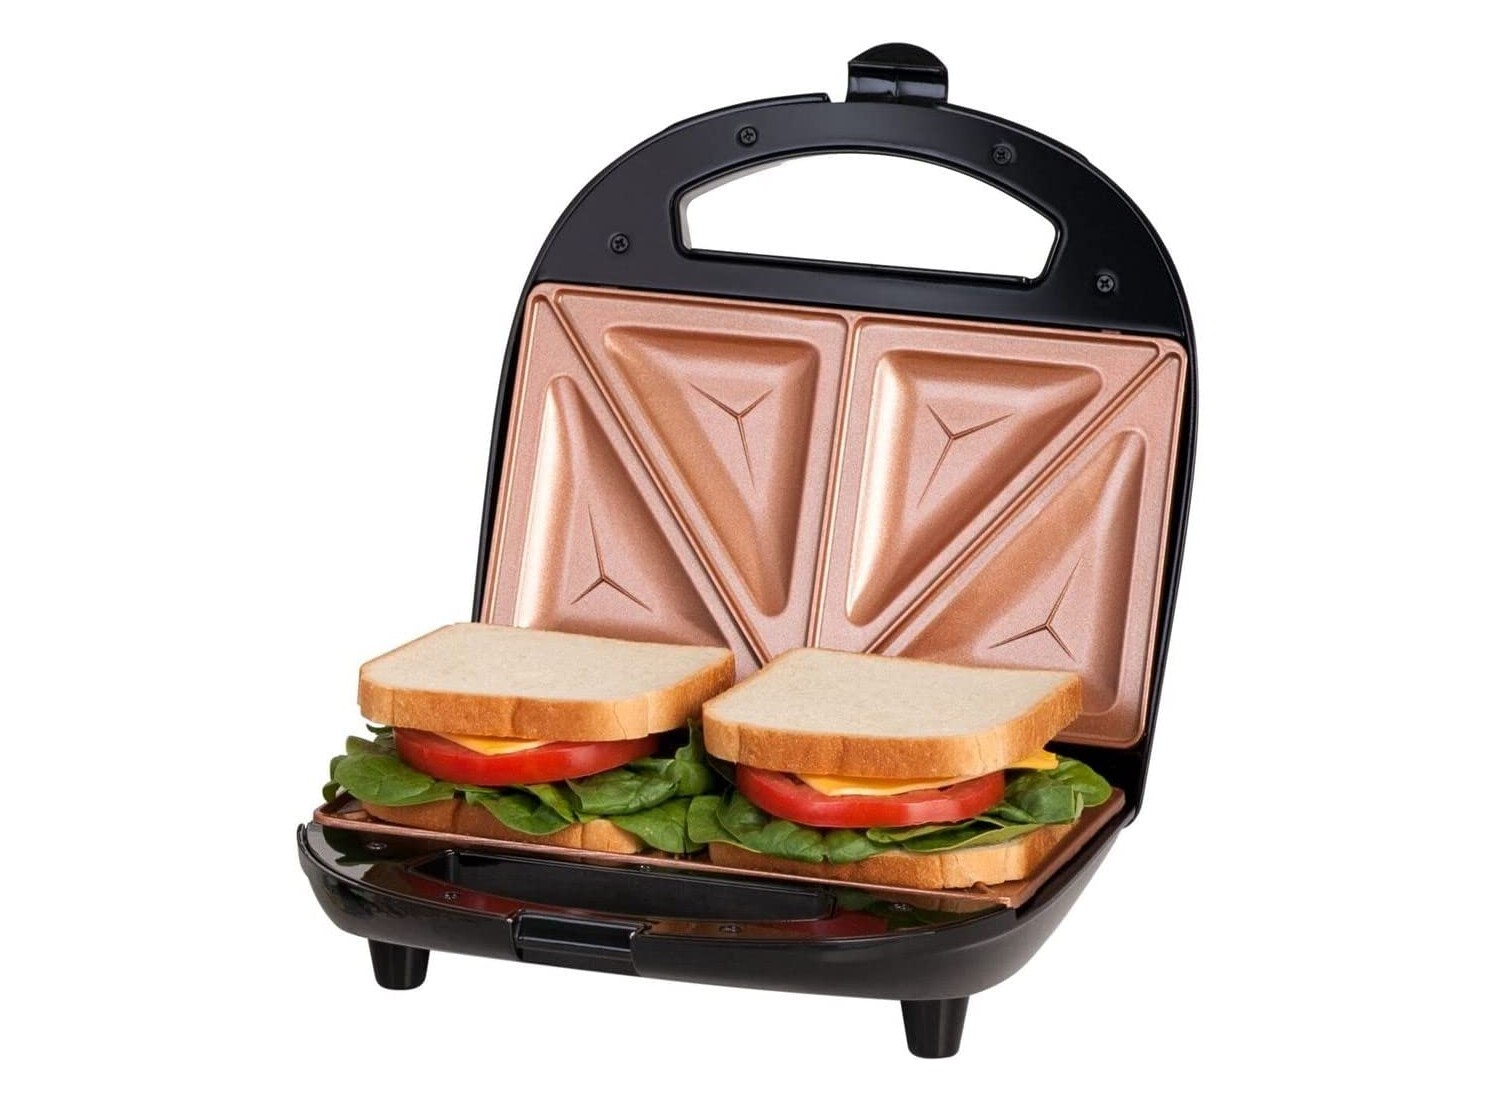 Breakfast Sandwich Maker Home Waffle Sloth Eater Toaster